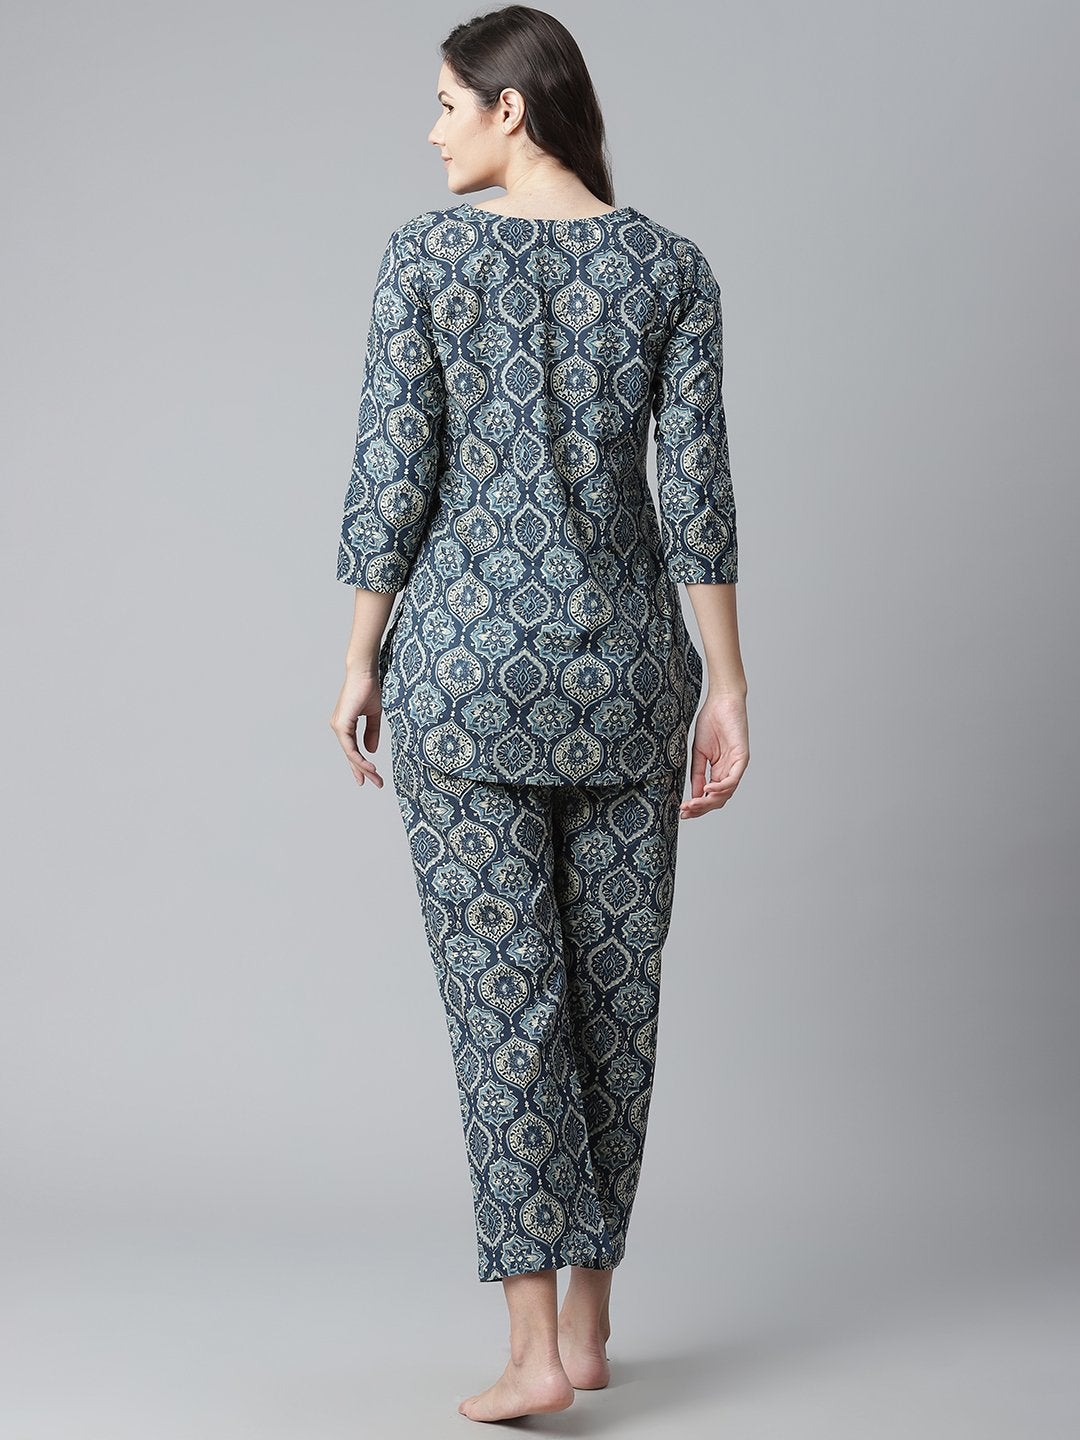 Women's Indigo Cotton Nightwear/Loungewear  - Wahenoor